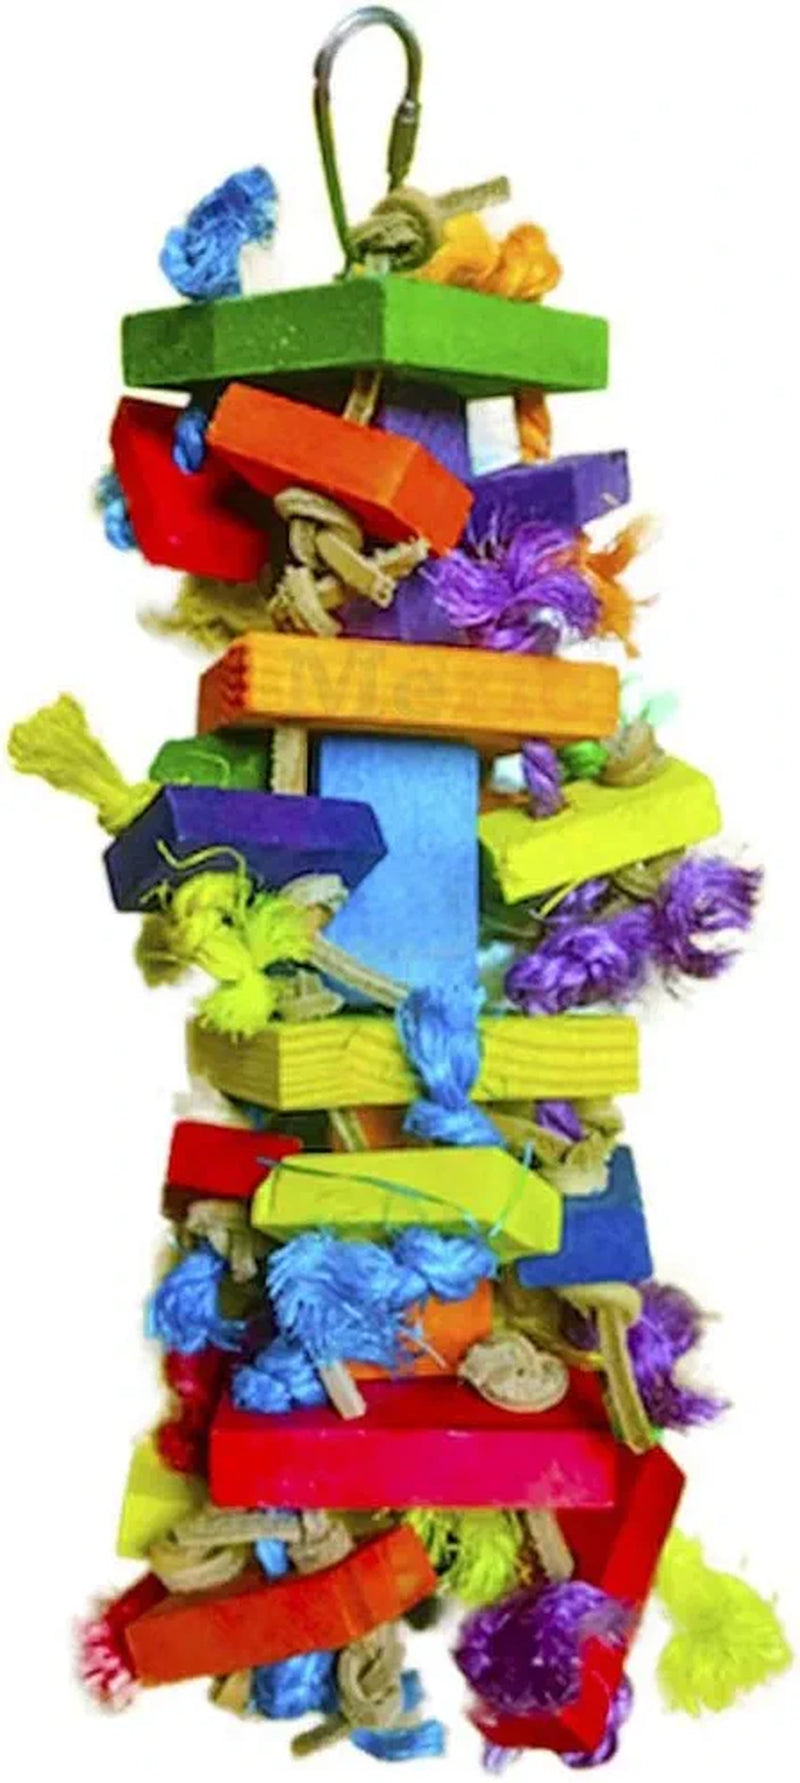 Meric Block Toy for House Birds, Nibbling Keeps Beaks Trimmed, Preening Keeps Feathers Groomed, Edible, Food-Grade Multicolored Wooden Blocks, 1-Pc Animals & Pet Supplies > Pet Supplies > Bird Supplies > Bird Toys Meric   